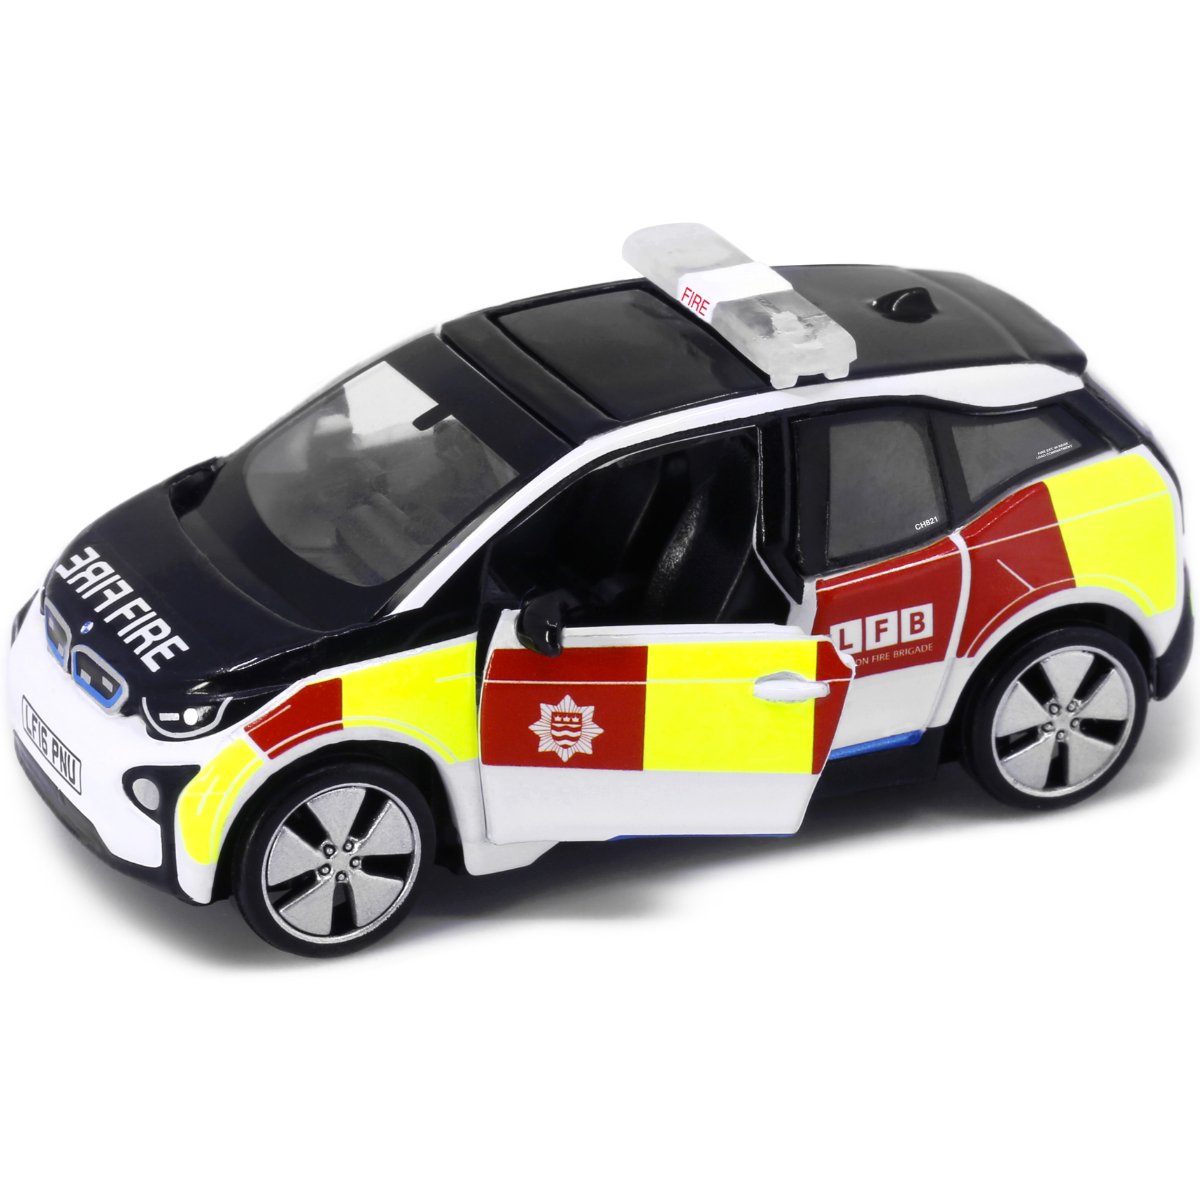 Tiny Models UK13 BMW i3 UK London Fire Brigade Patrol Car (1:64 Scale) - Phillips Hobbies